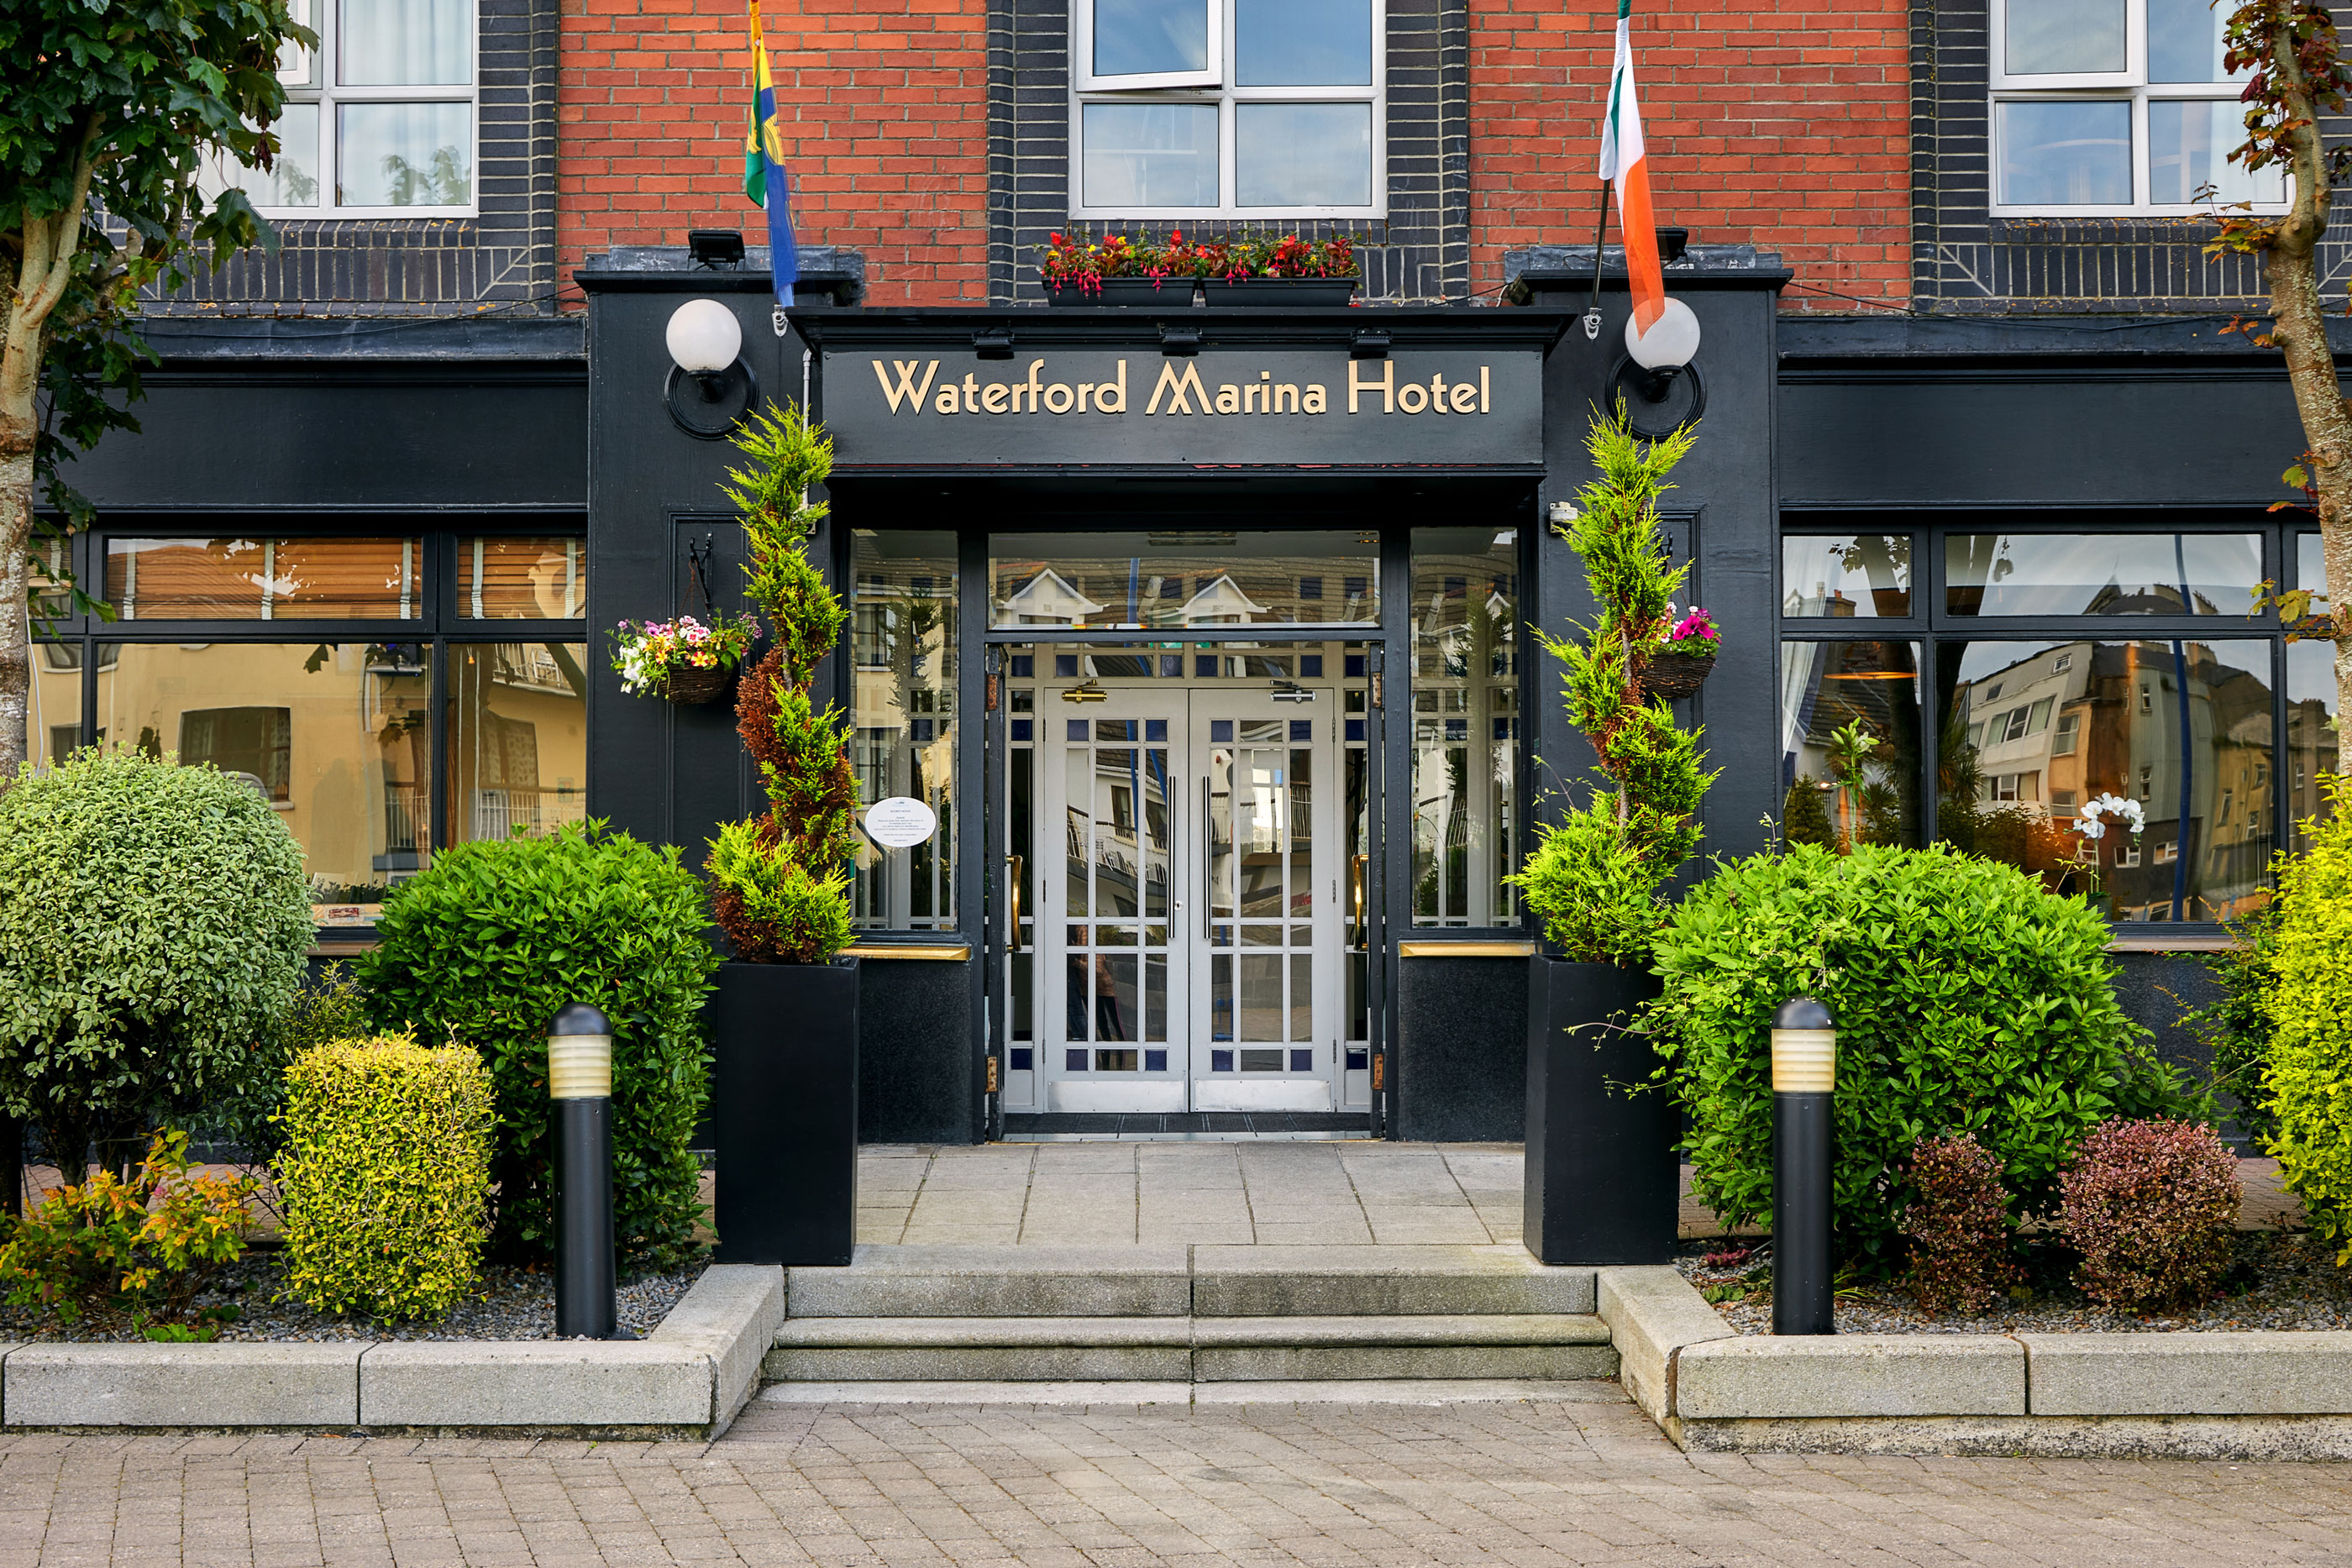 Waterford Marina Hotel image